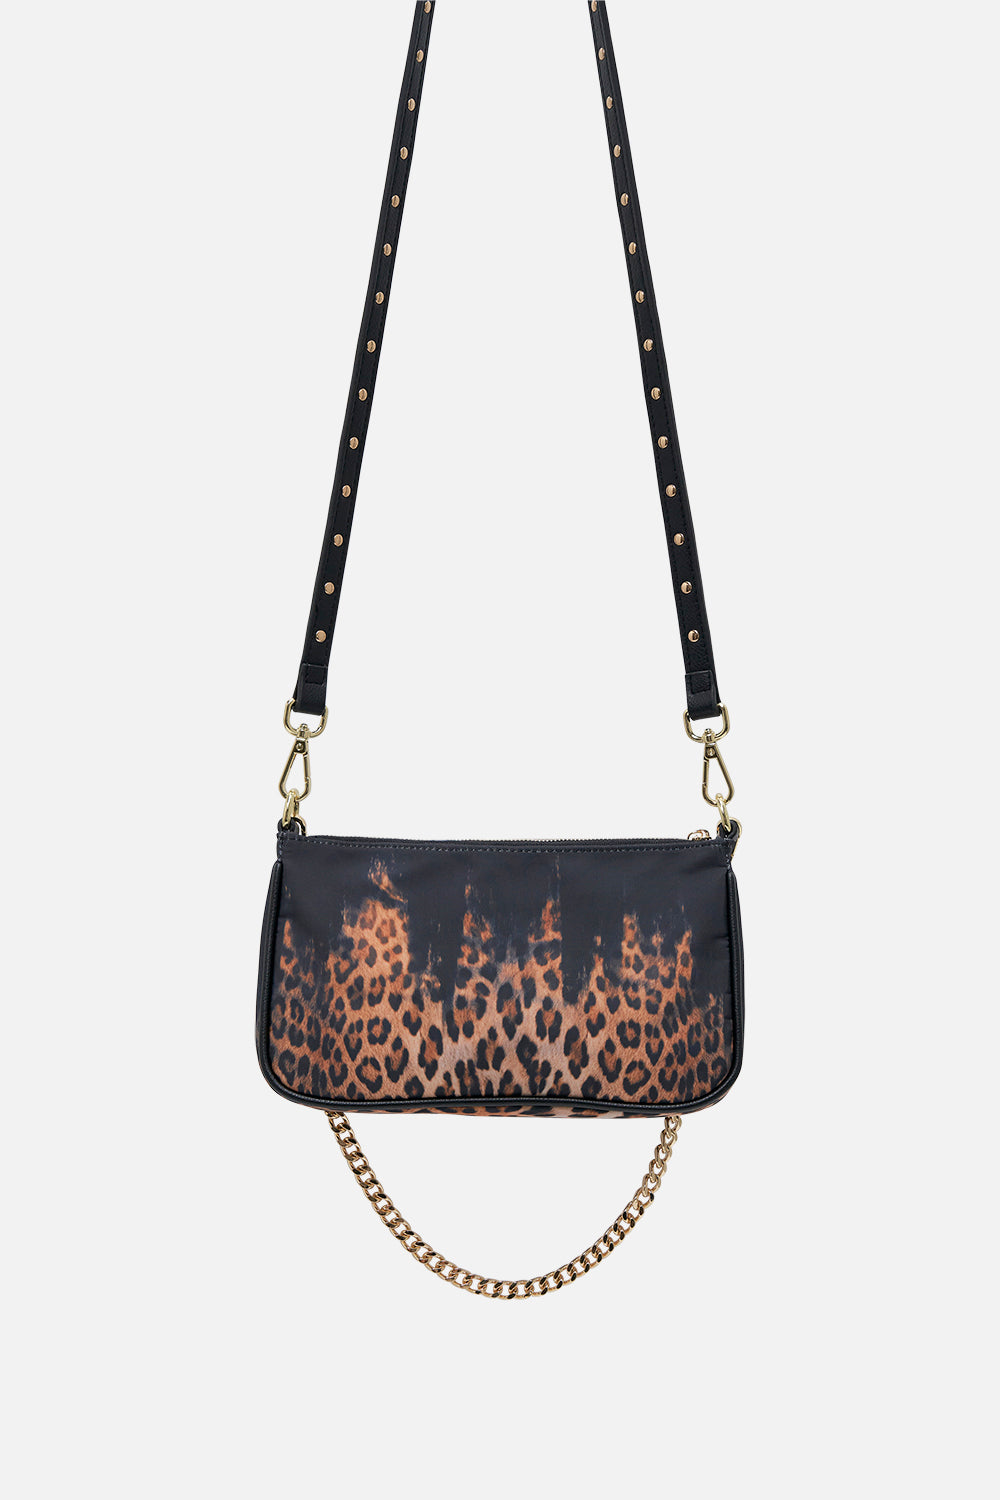 Back product view of CAMILLA black nylon bag in Jungle Dreaming animal print 